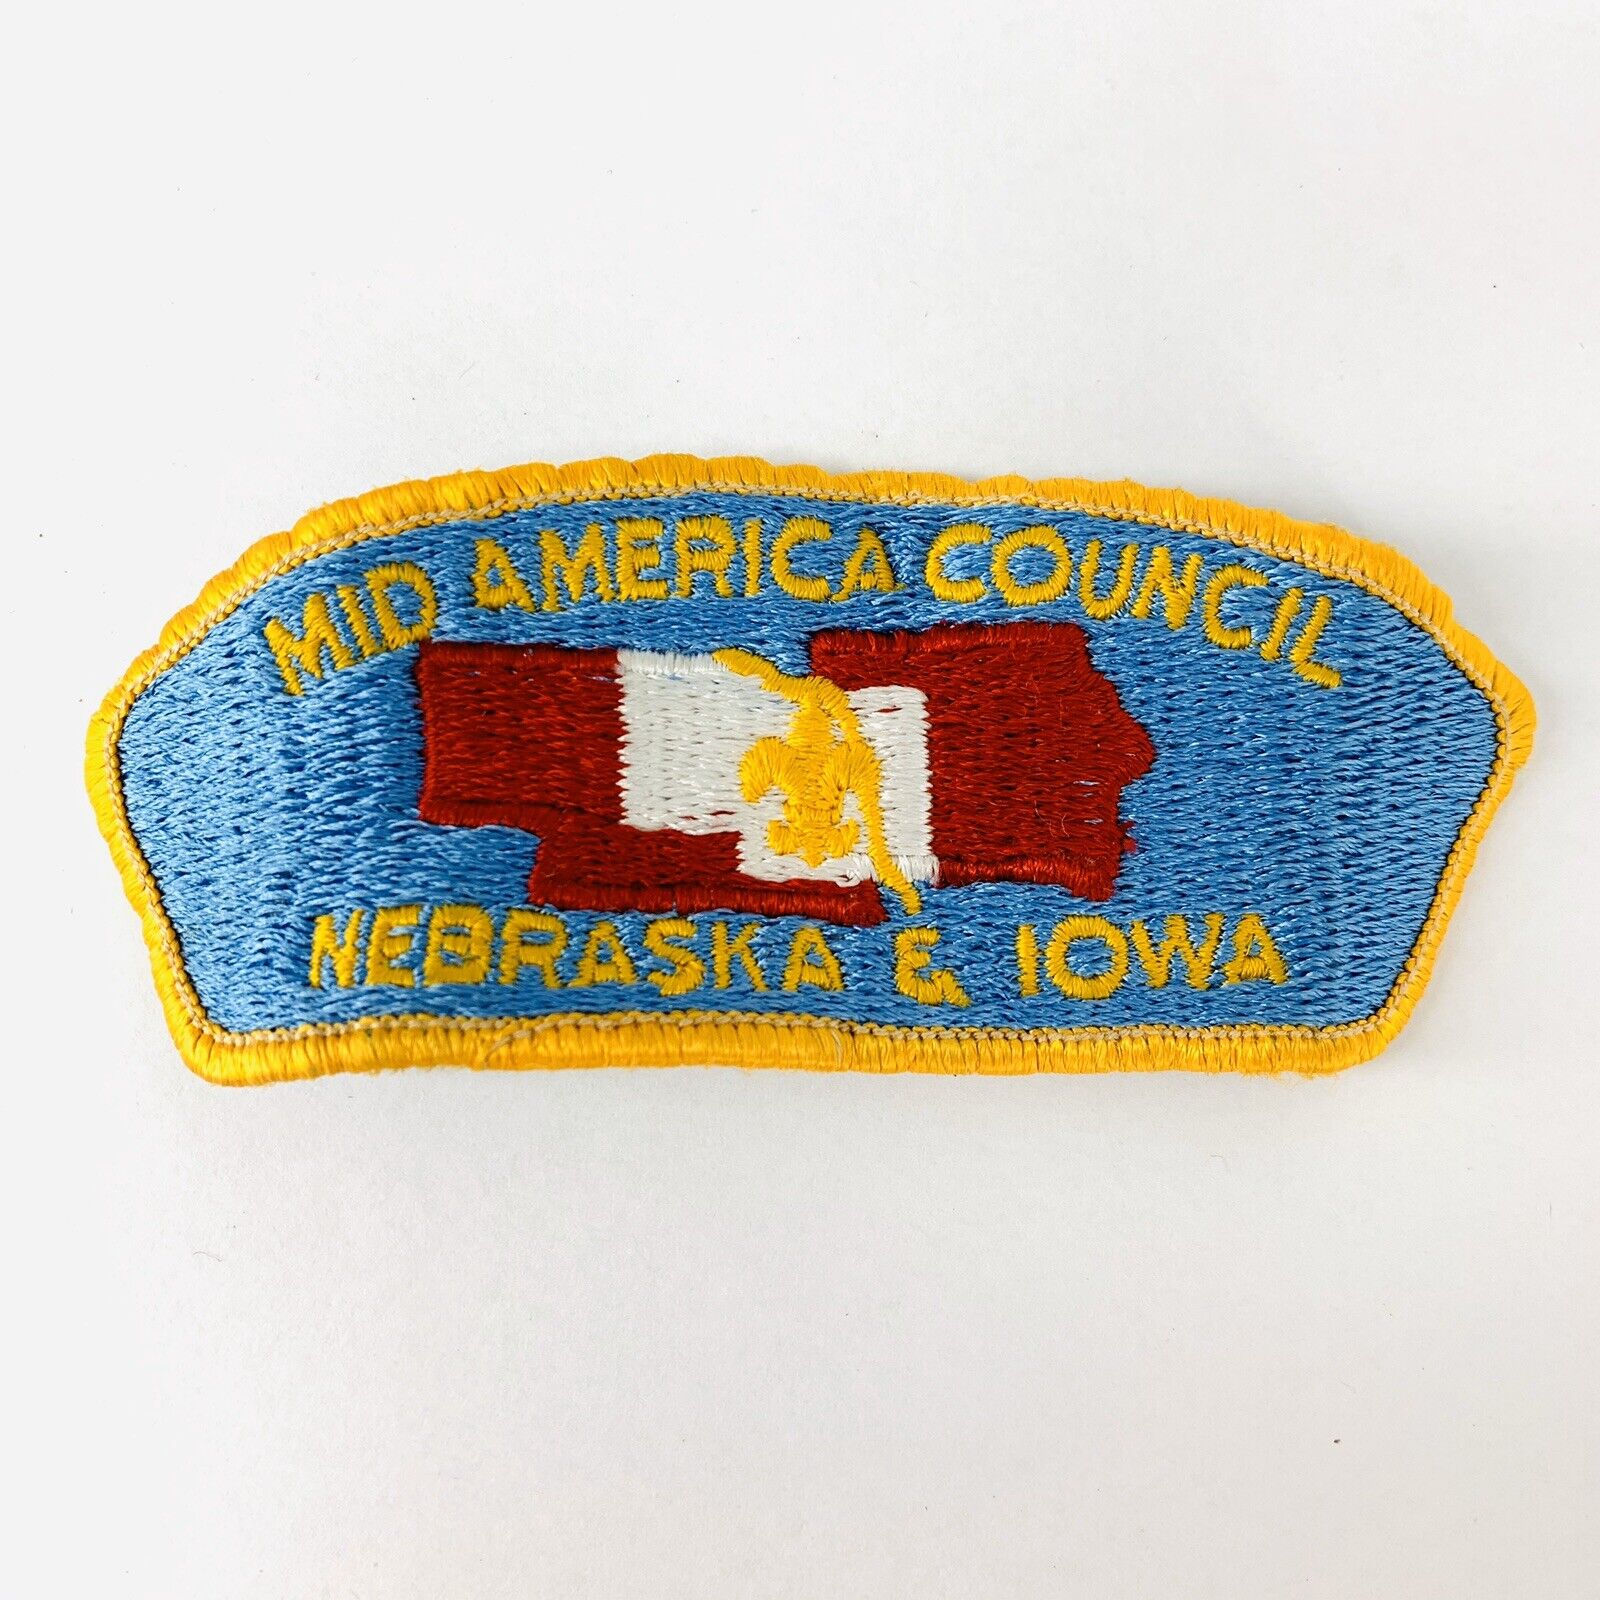 Vintage Bsa Boy Scouts Of America Patch Mid America Council Nebraska Iowa